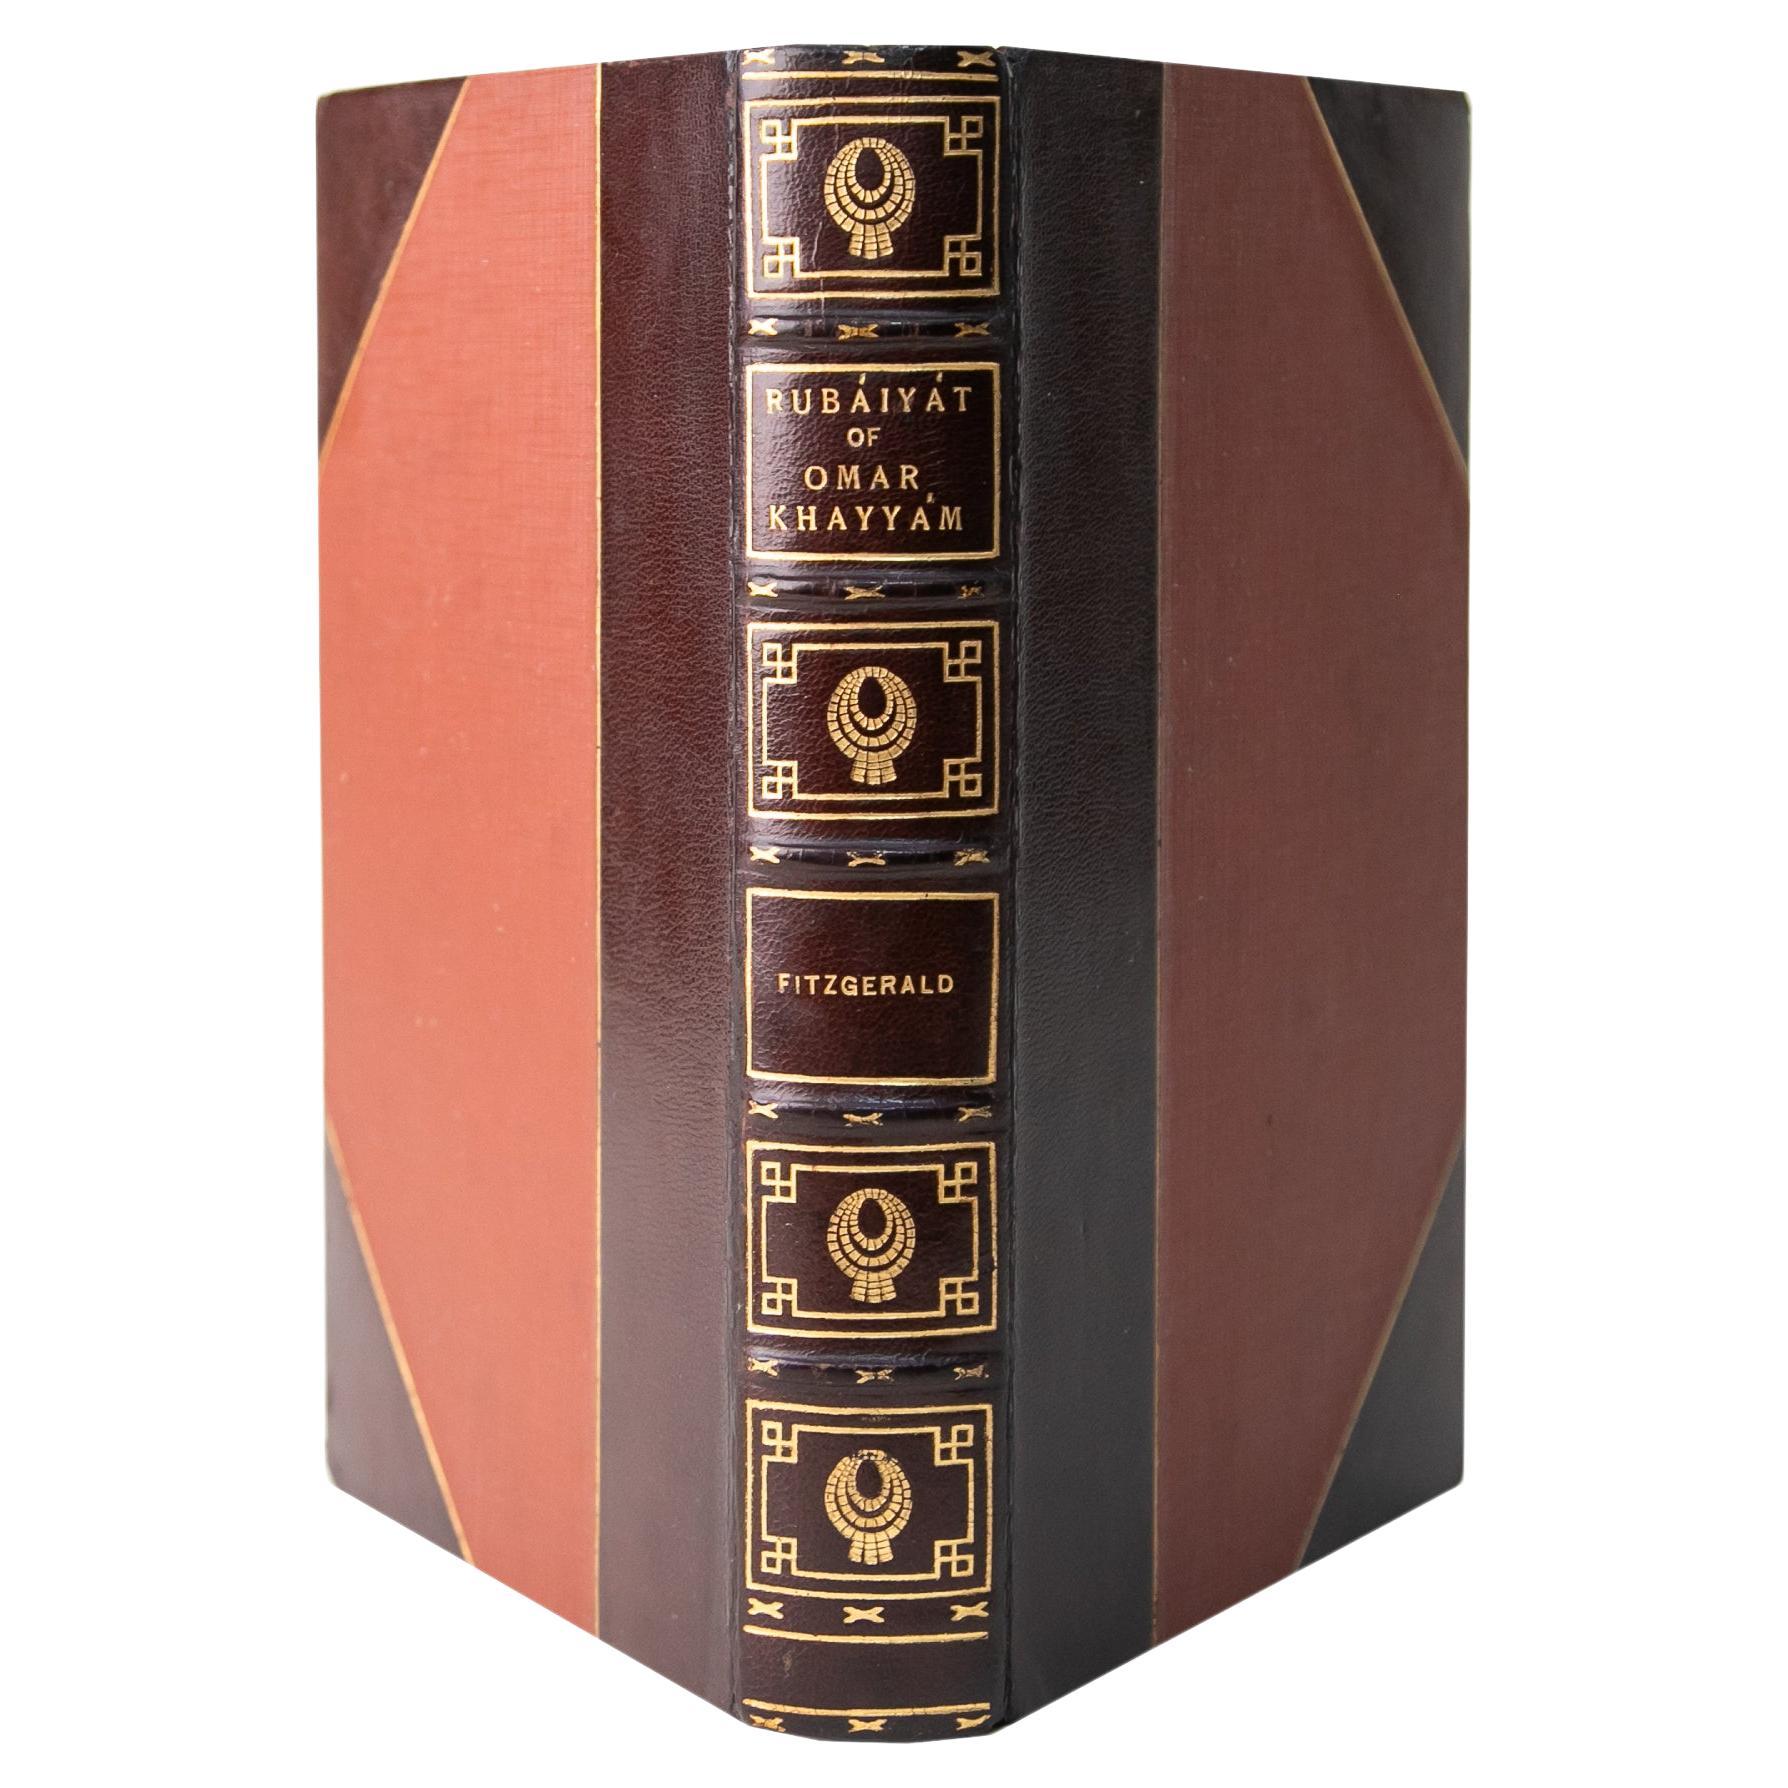 1 Volume. Edward Fitzgerald, Rubiáiyát of Omar Khayyám. For Sale